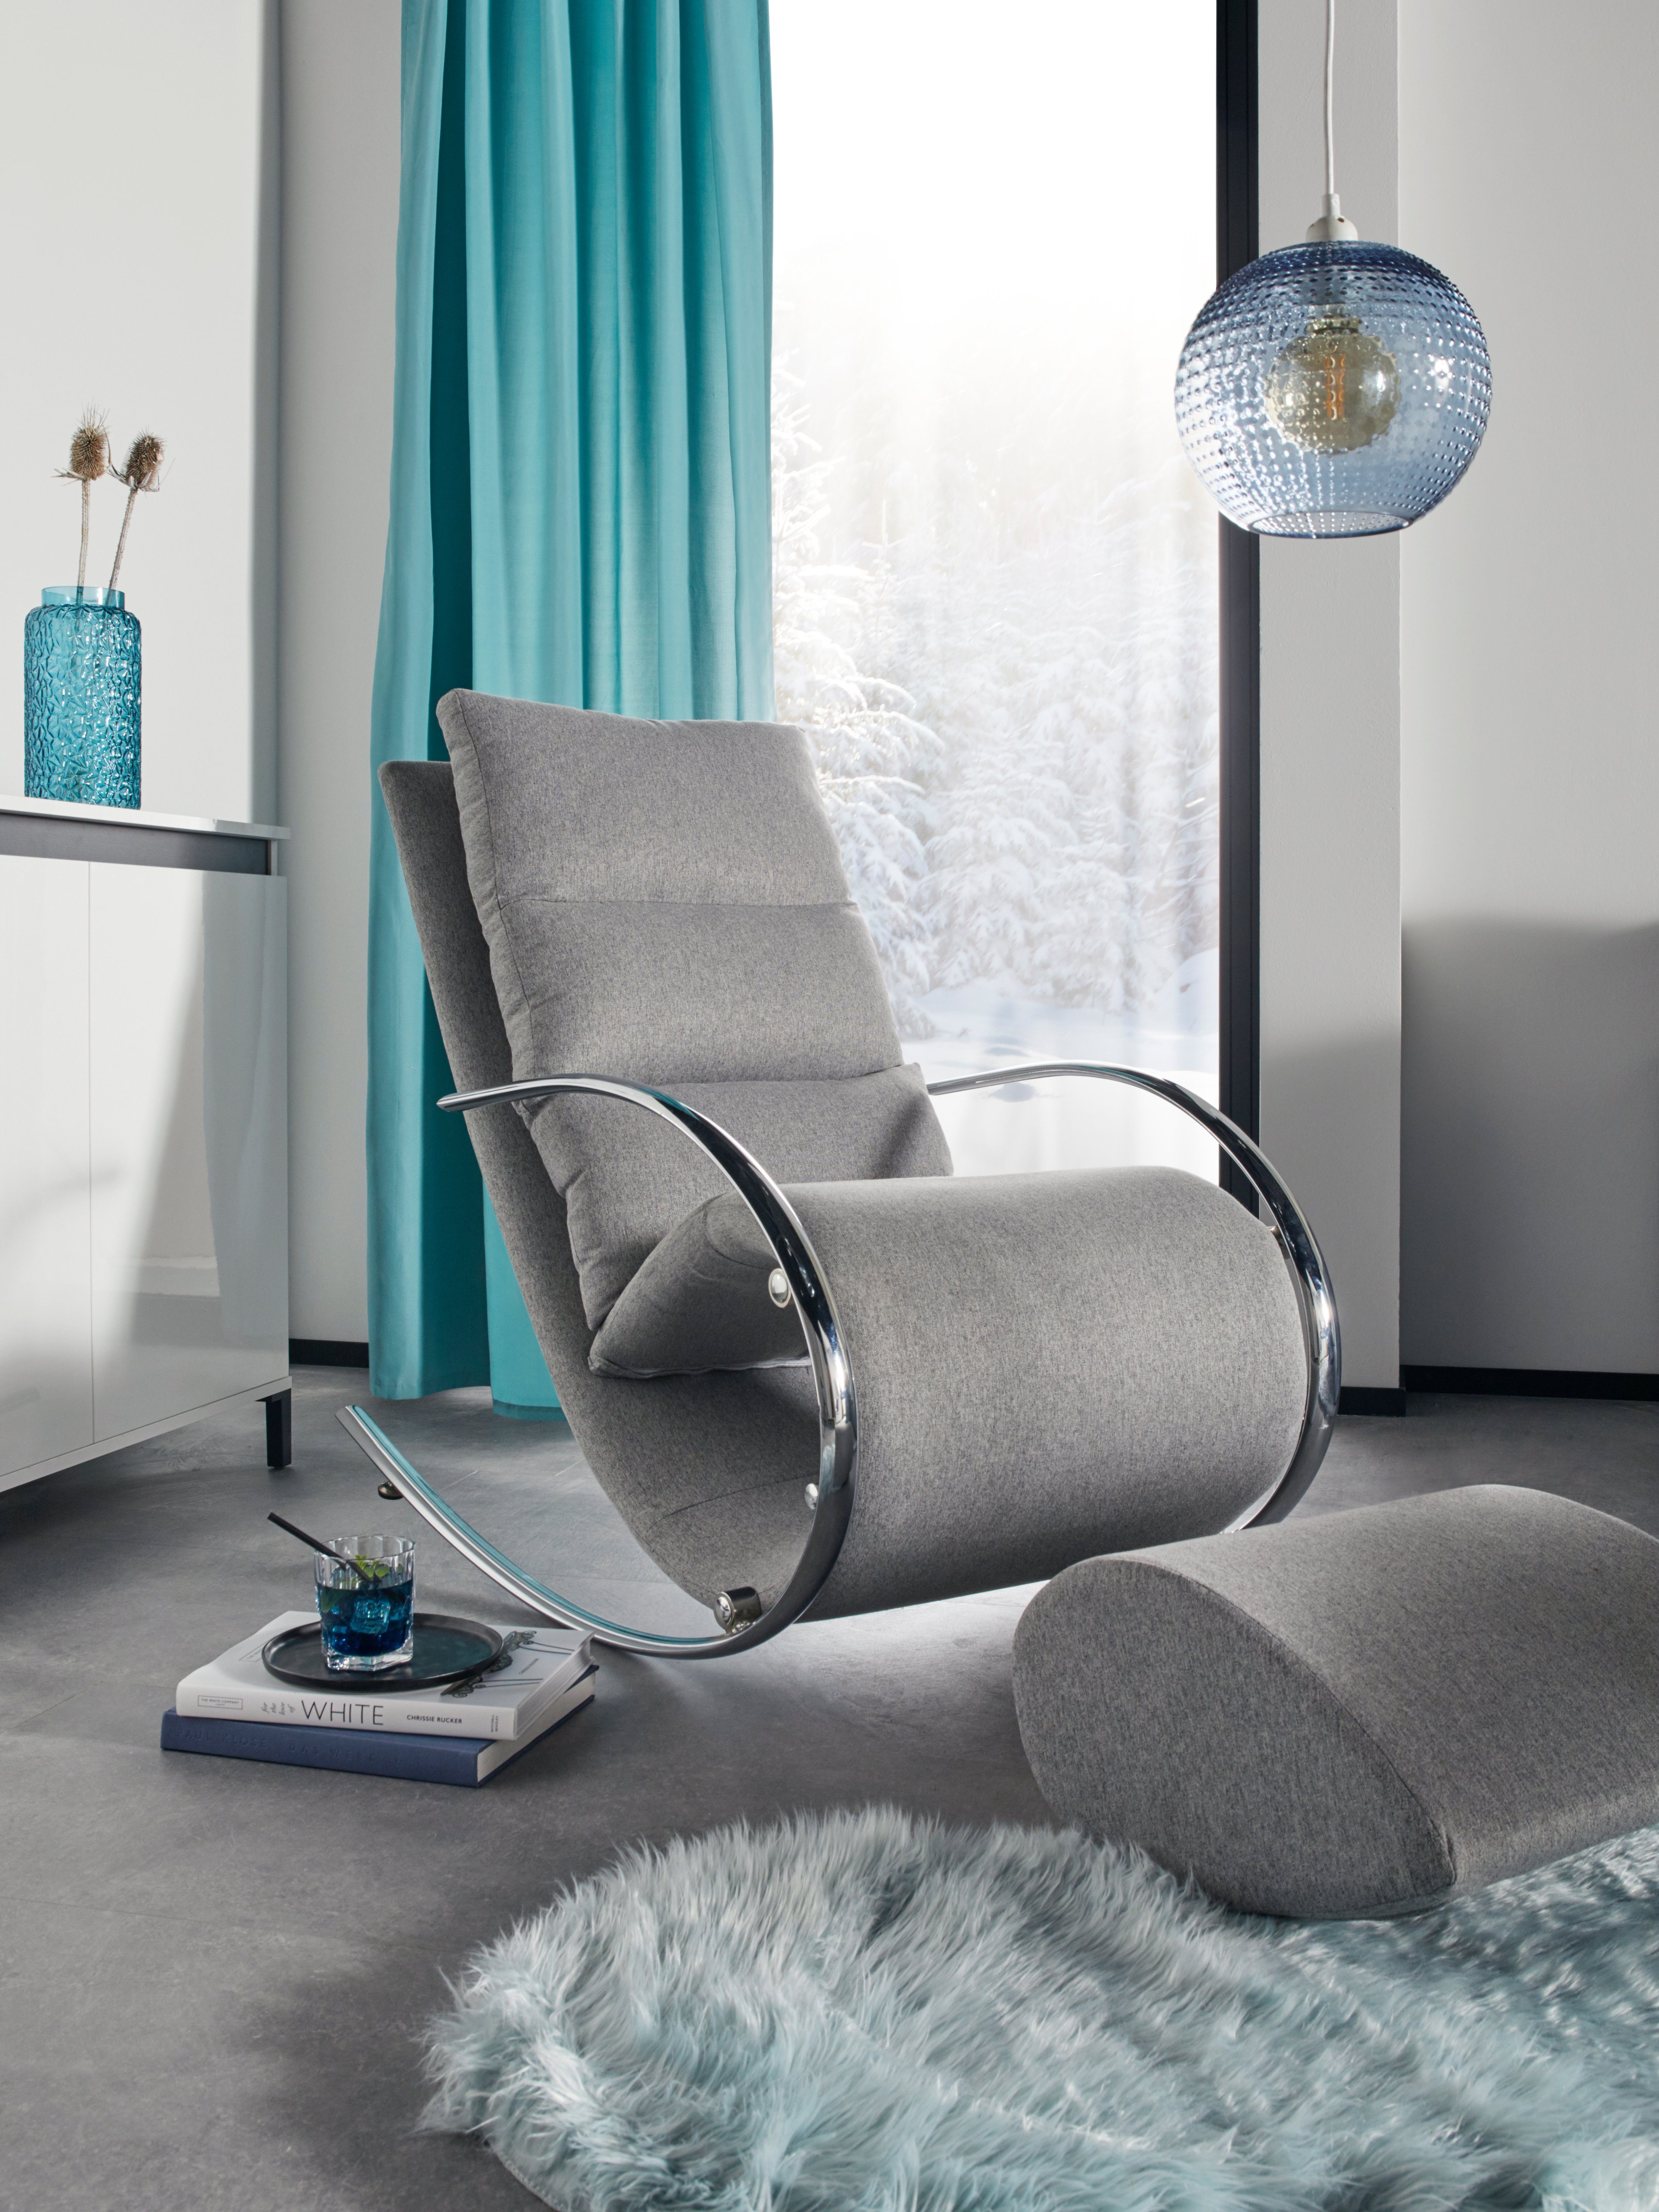 MCA furniture Relaxsessel York, Hocker, kg grau | grau Relaxsessel bis belastbar 100 mit